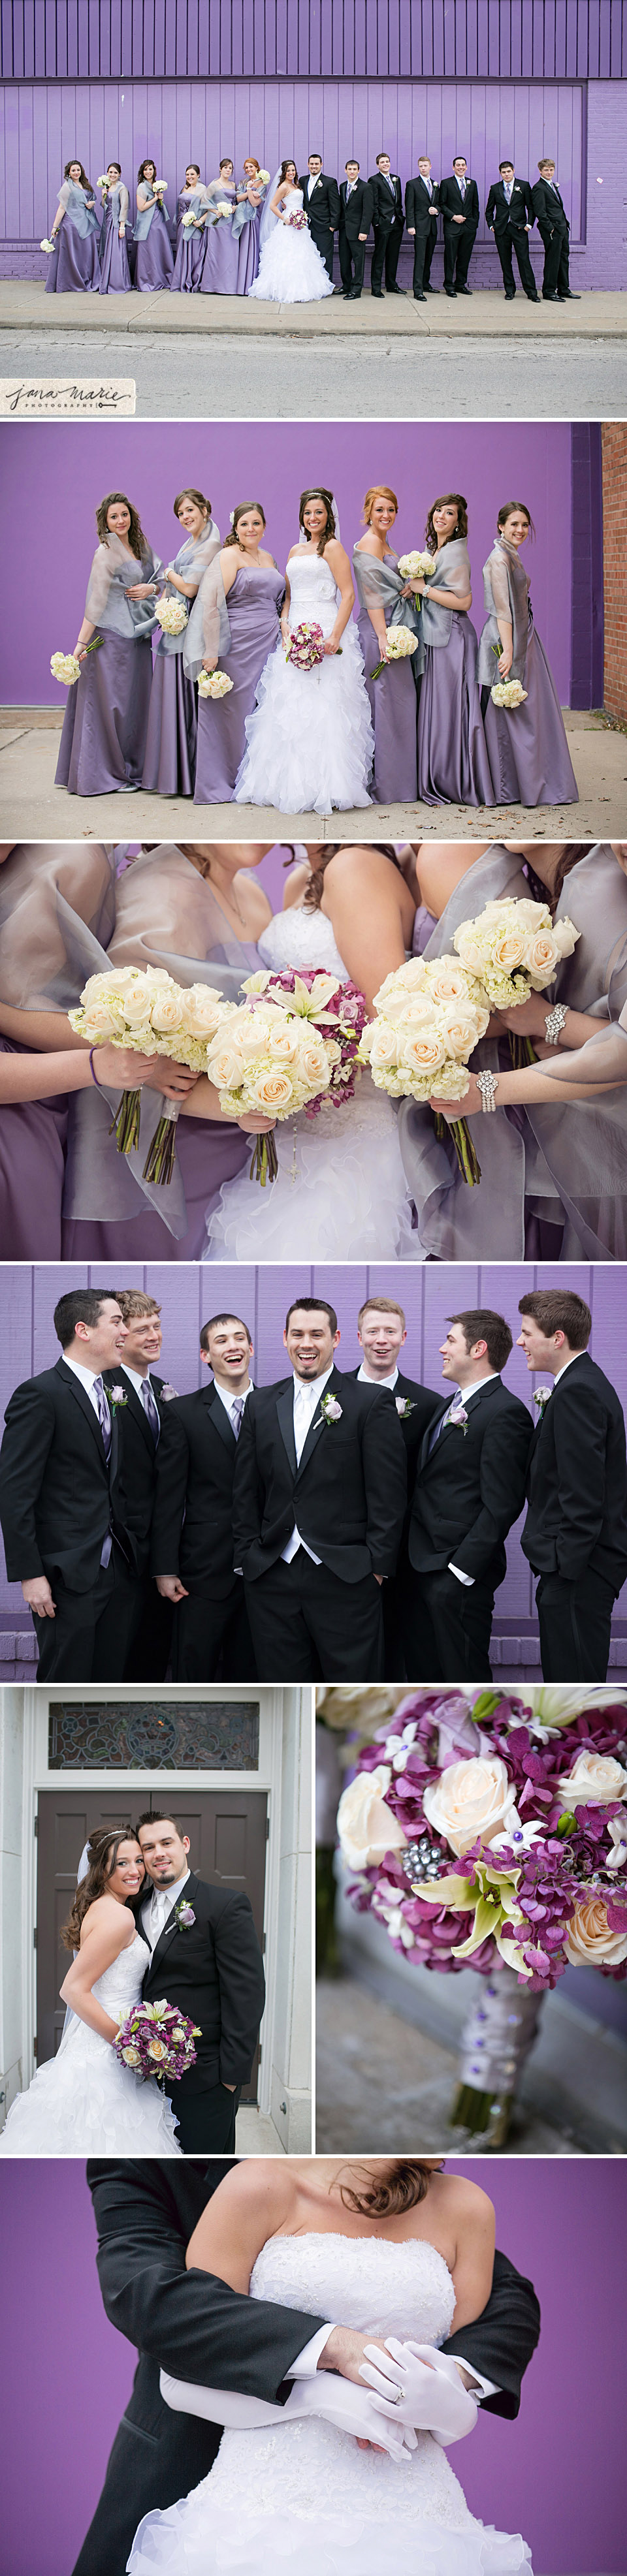 Kansas City wedding photography, Jana Marie Photos, Bridesmaids, purple details, laughter, love, Tip Top Tux